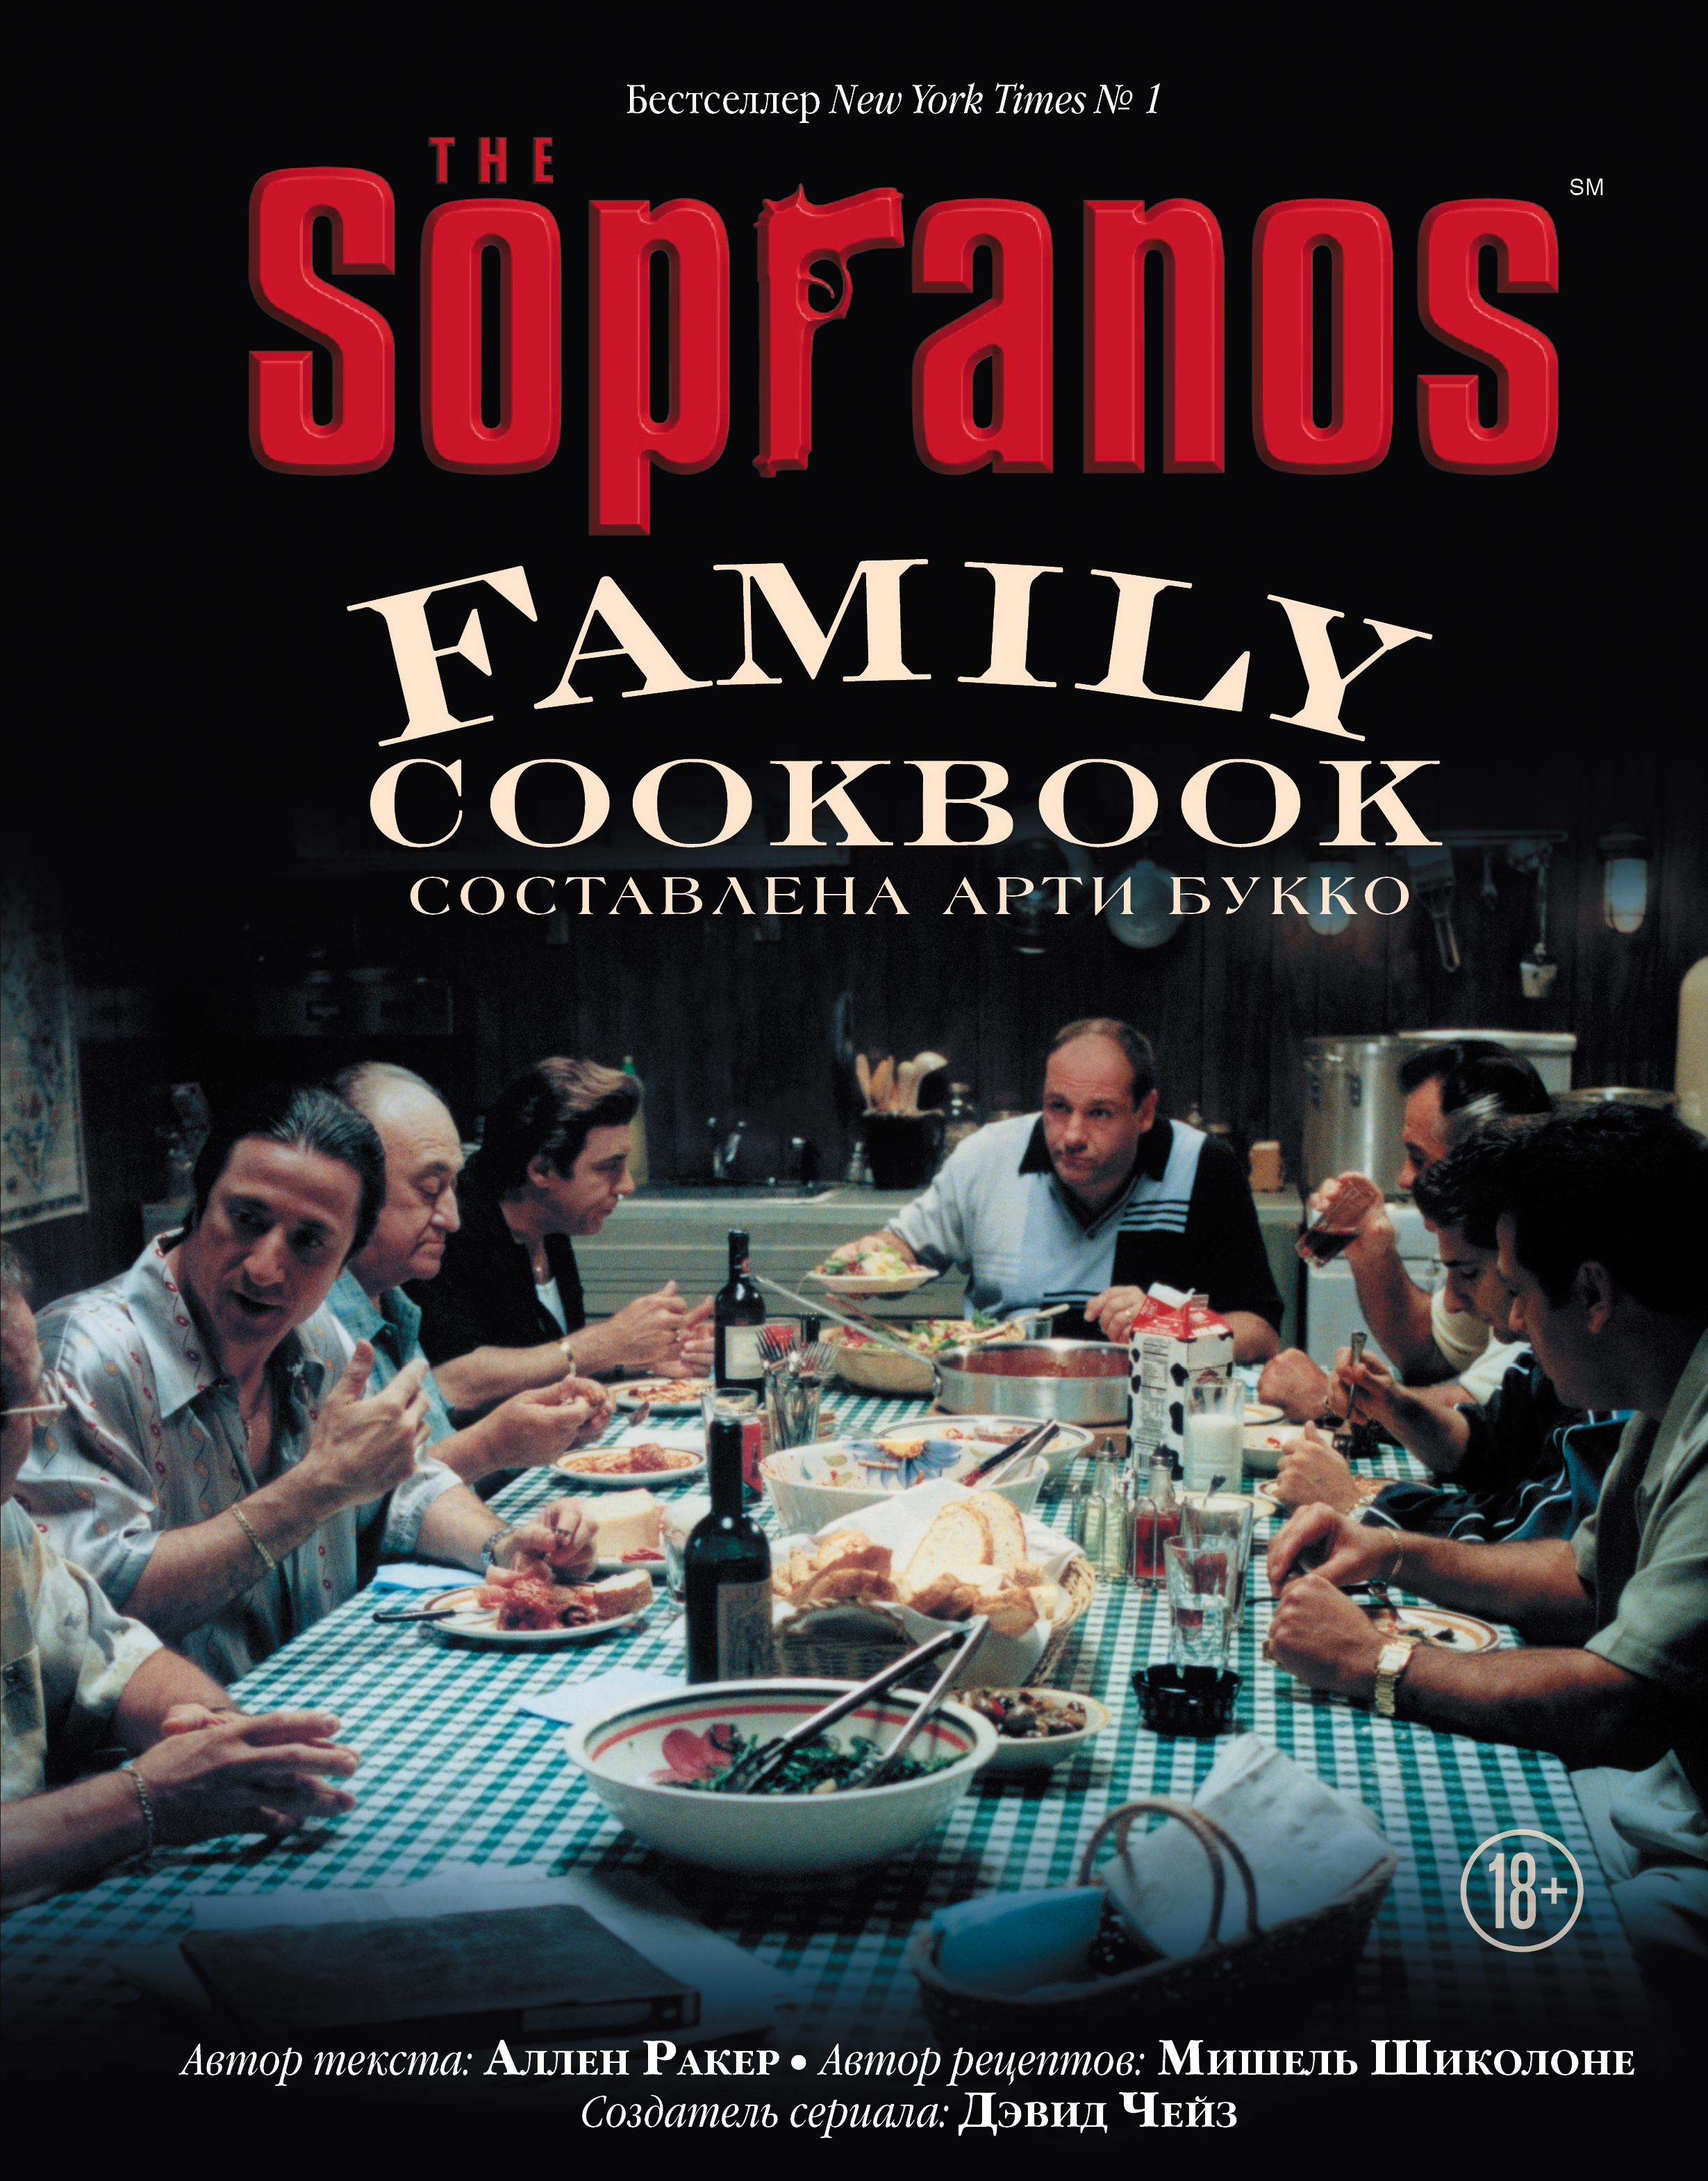 The Sopranos Family Cookbook / Кулинарная книга клана Сопрано 